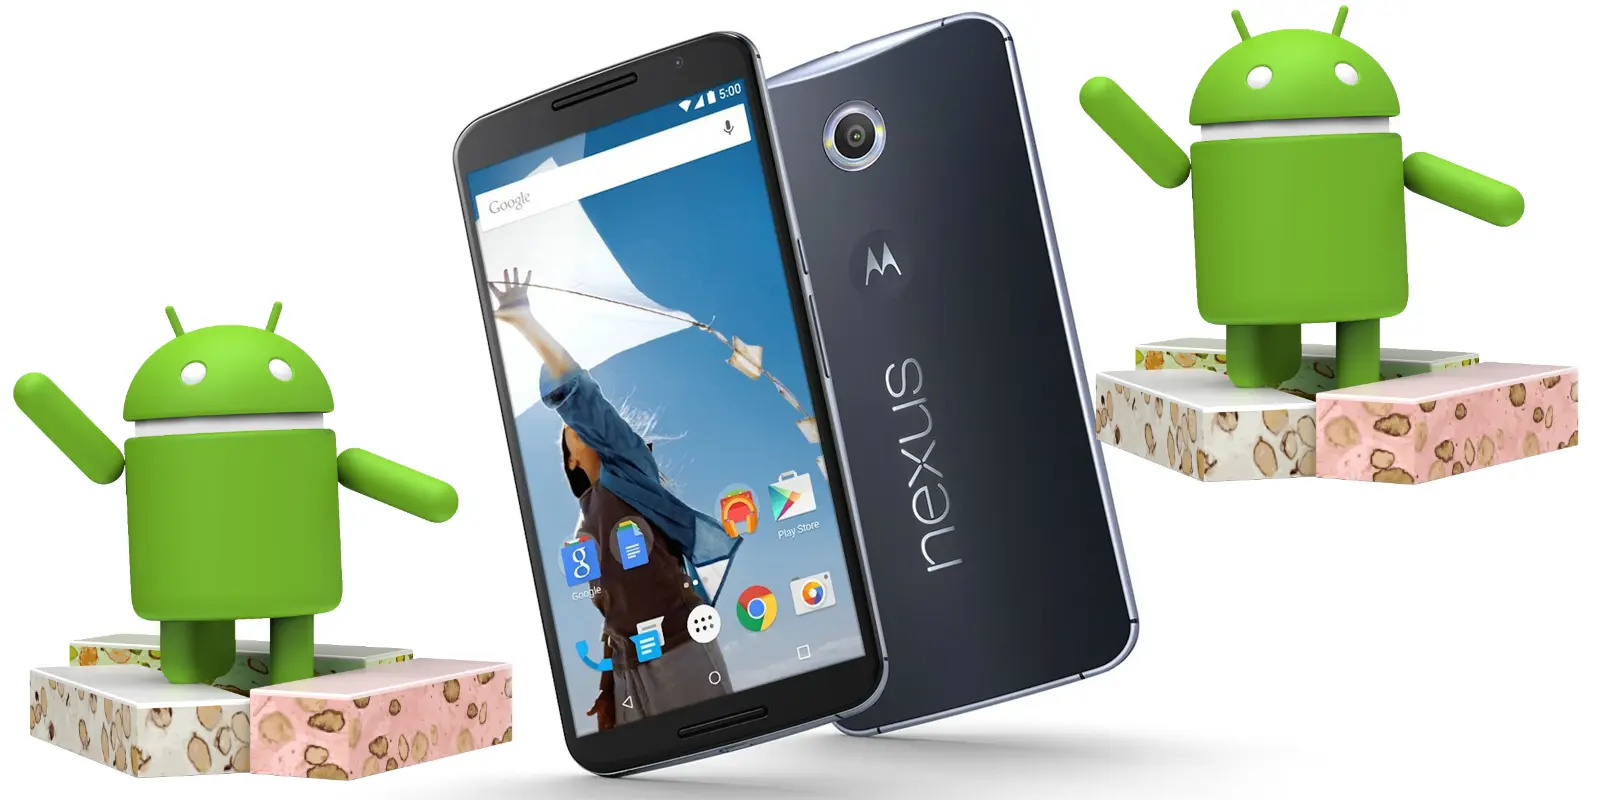 Android 7.0 Nougat finalmente llega al Nexus 6